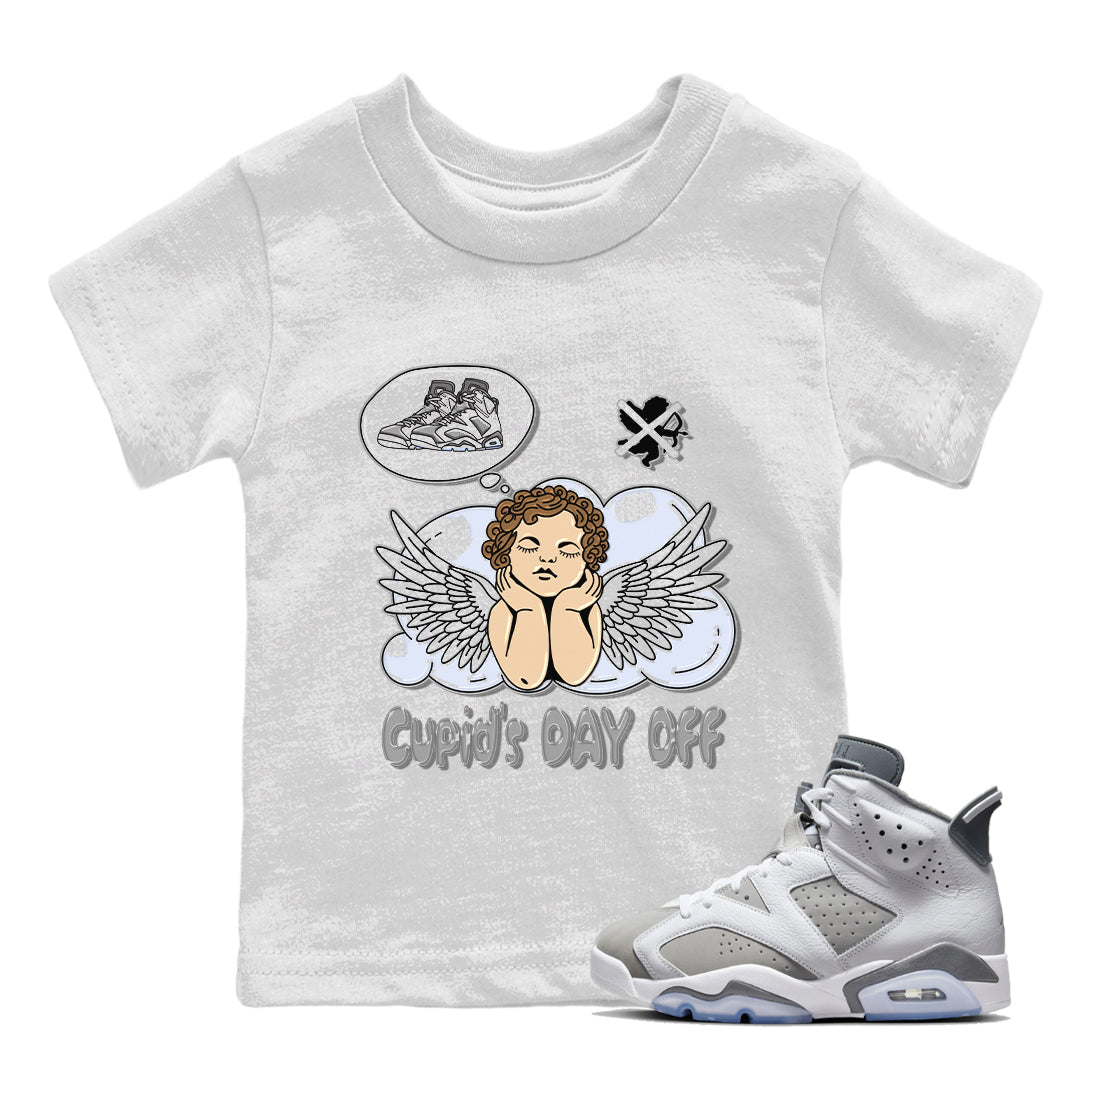 Jordan 6 Cool Grey Sneaker Match Tees Cupids Day Off Sneaker Tees Jordan 6 Cool Grey Sneaker Release Tees Kids Shirts